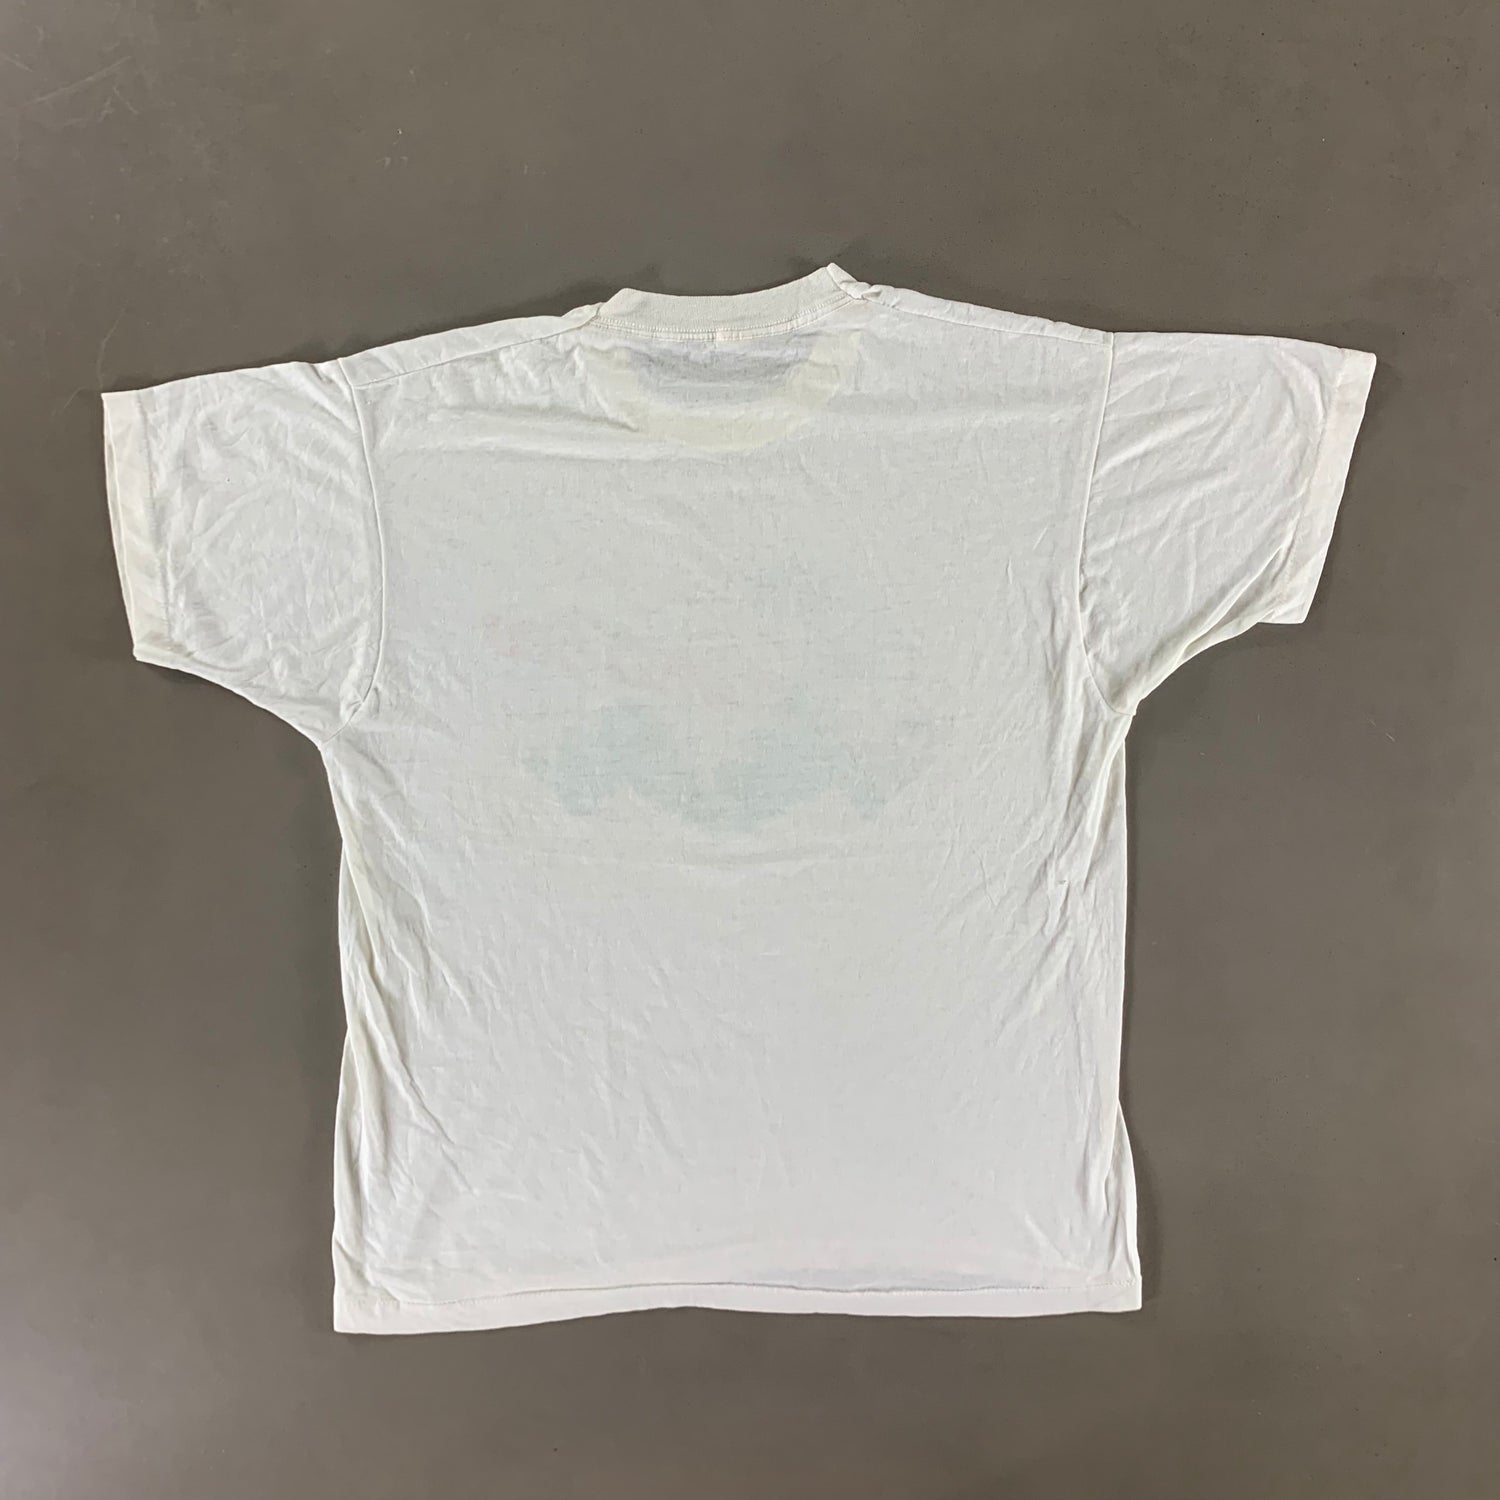 Vintage 1980s Florida T-shirt size XL